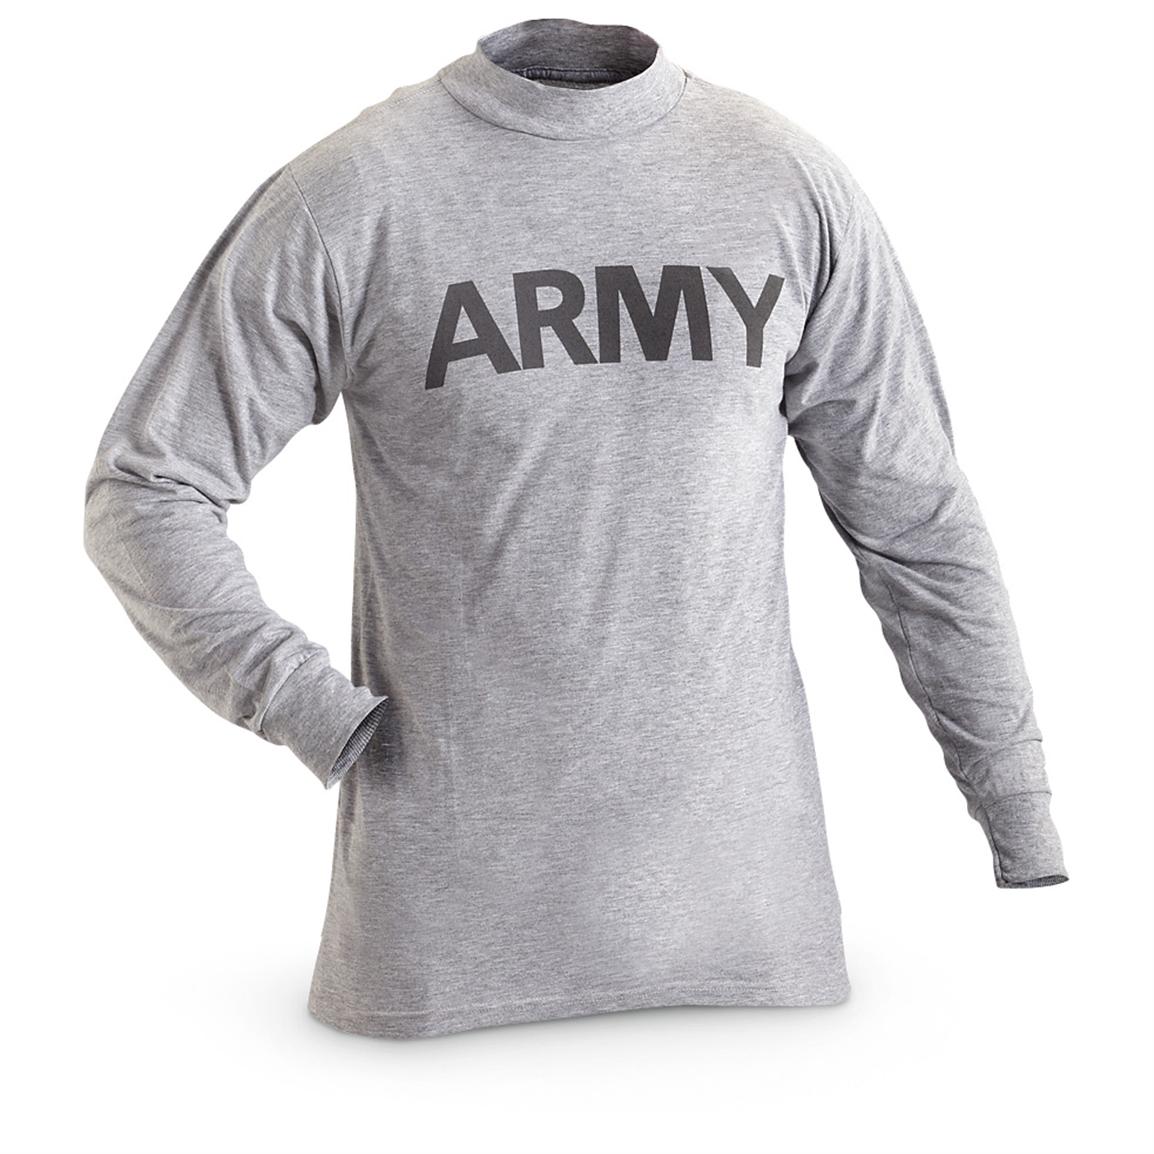 2 New U.S. Military Army Shirts, Gray - 222001, T-Shirts at Sportsman's ...